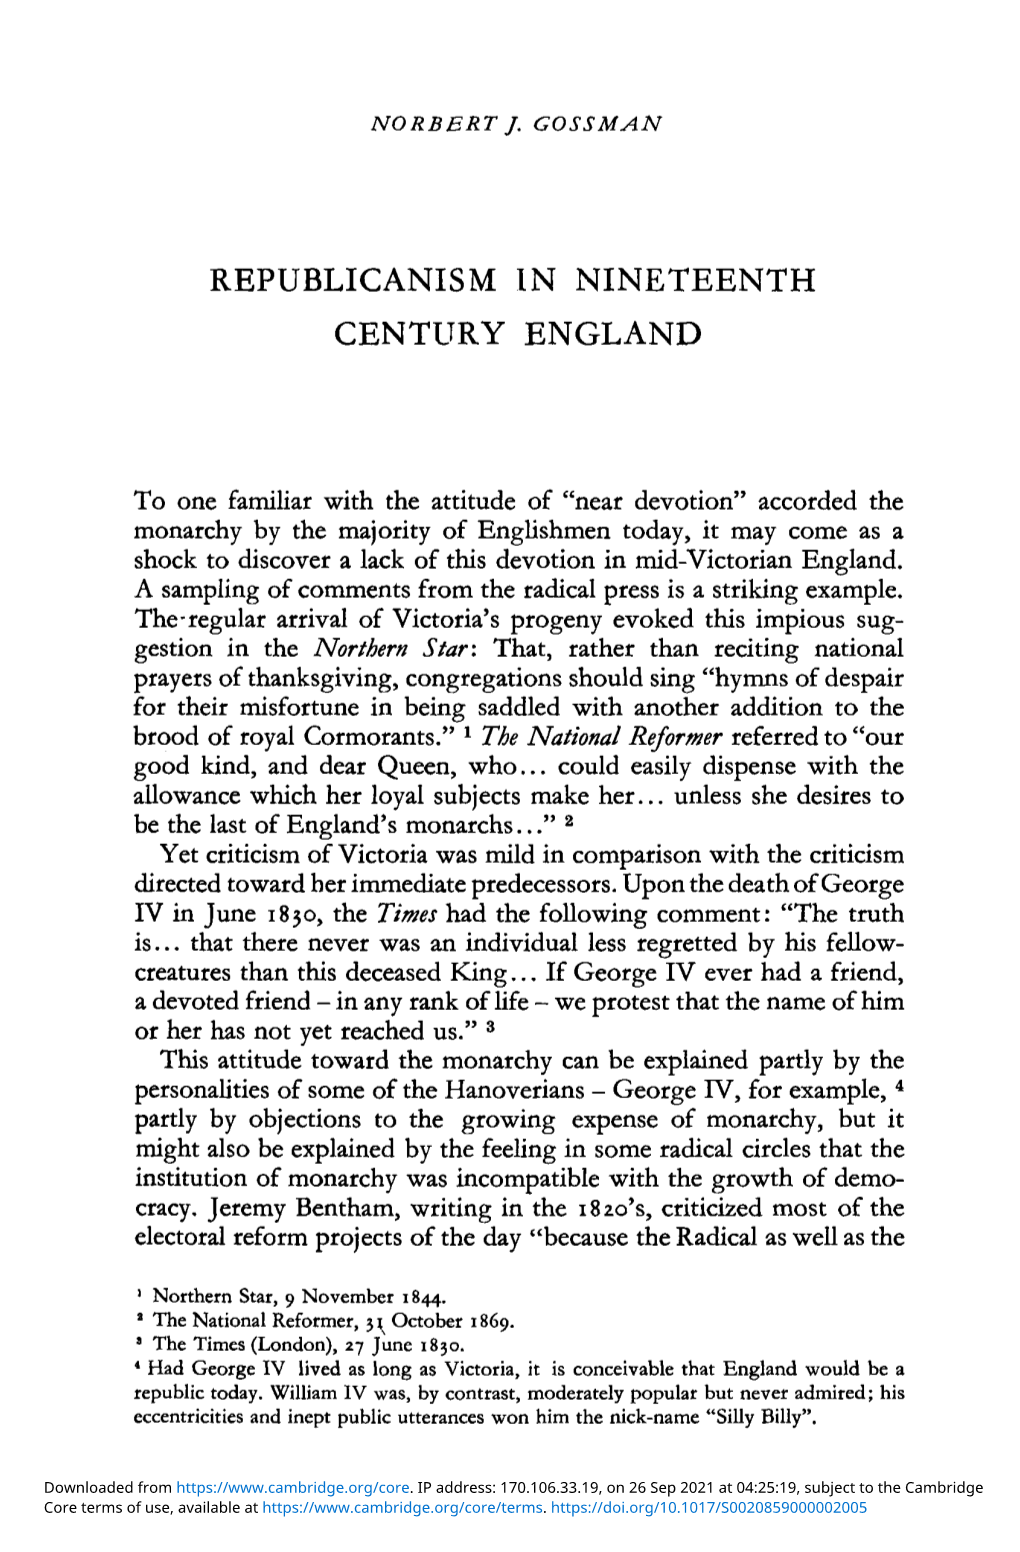 Republicanism in Nineteenth Century England